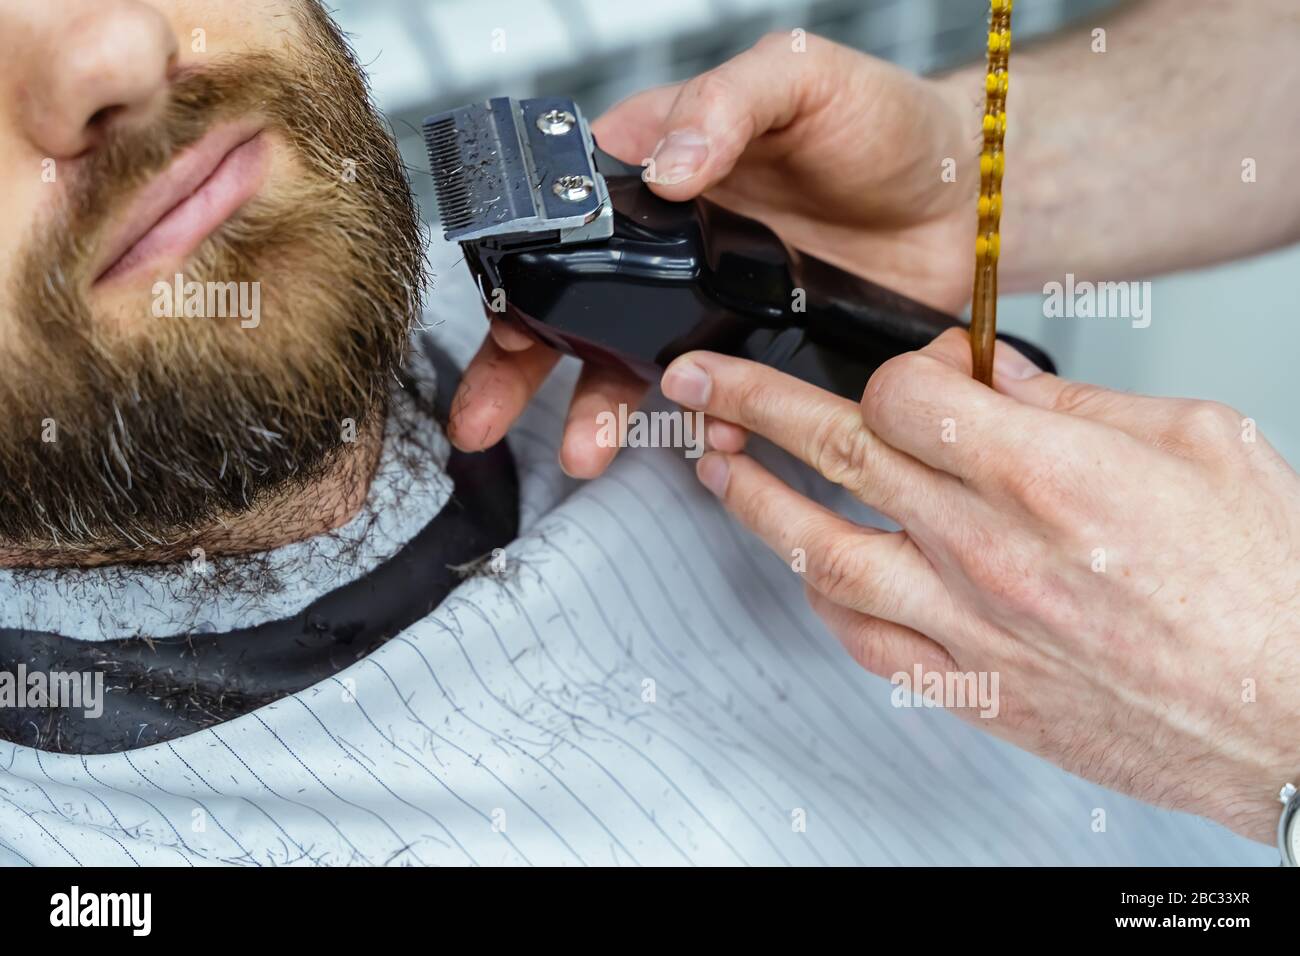 man trimming machine